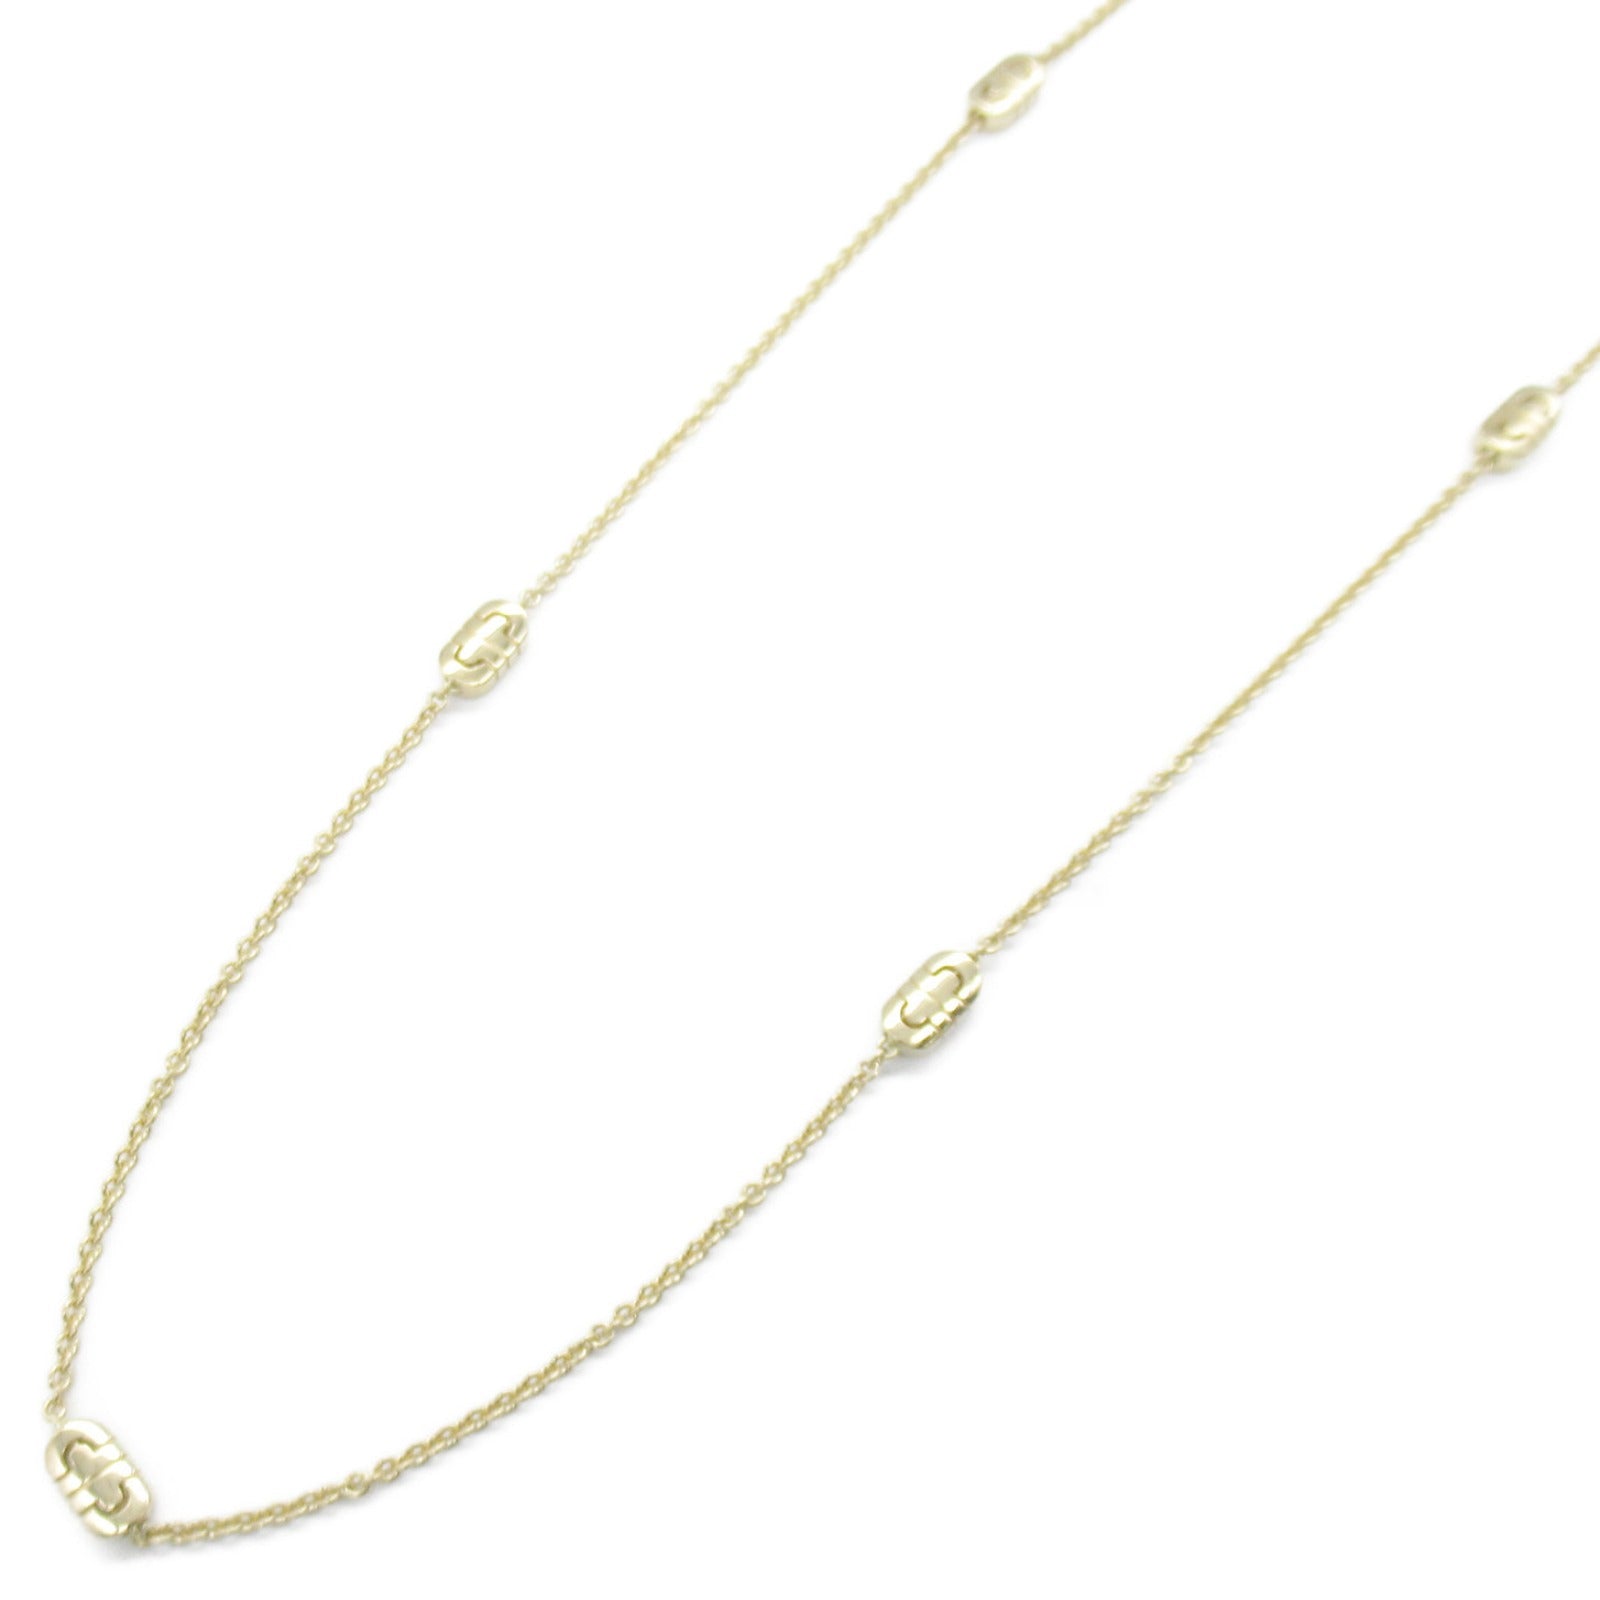 Bulgari BVLGARI Palentine necklace necklace jewelry K18 (yellow g)  Gold